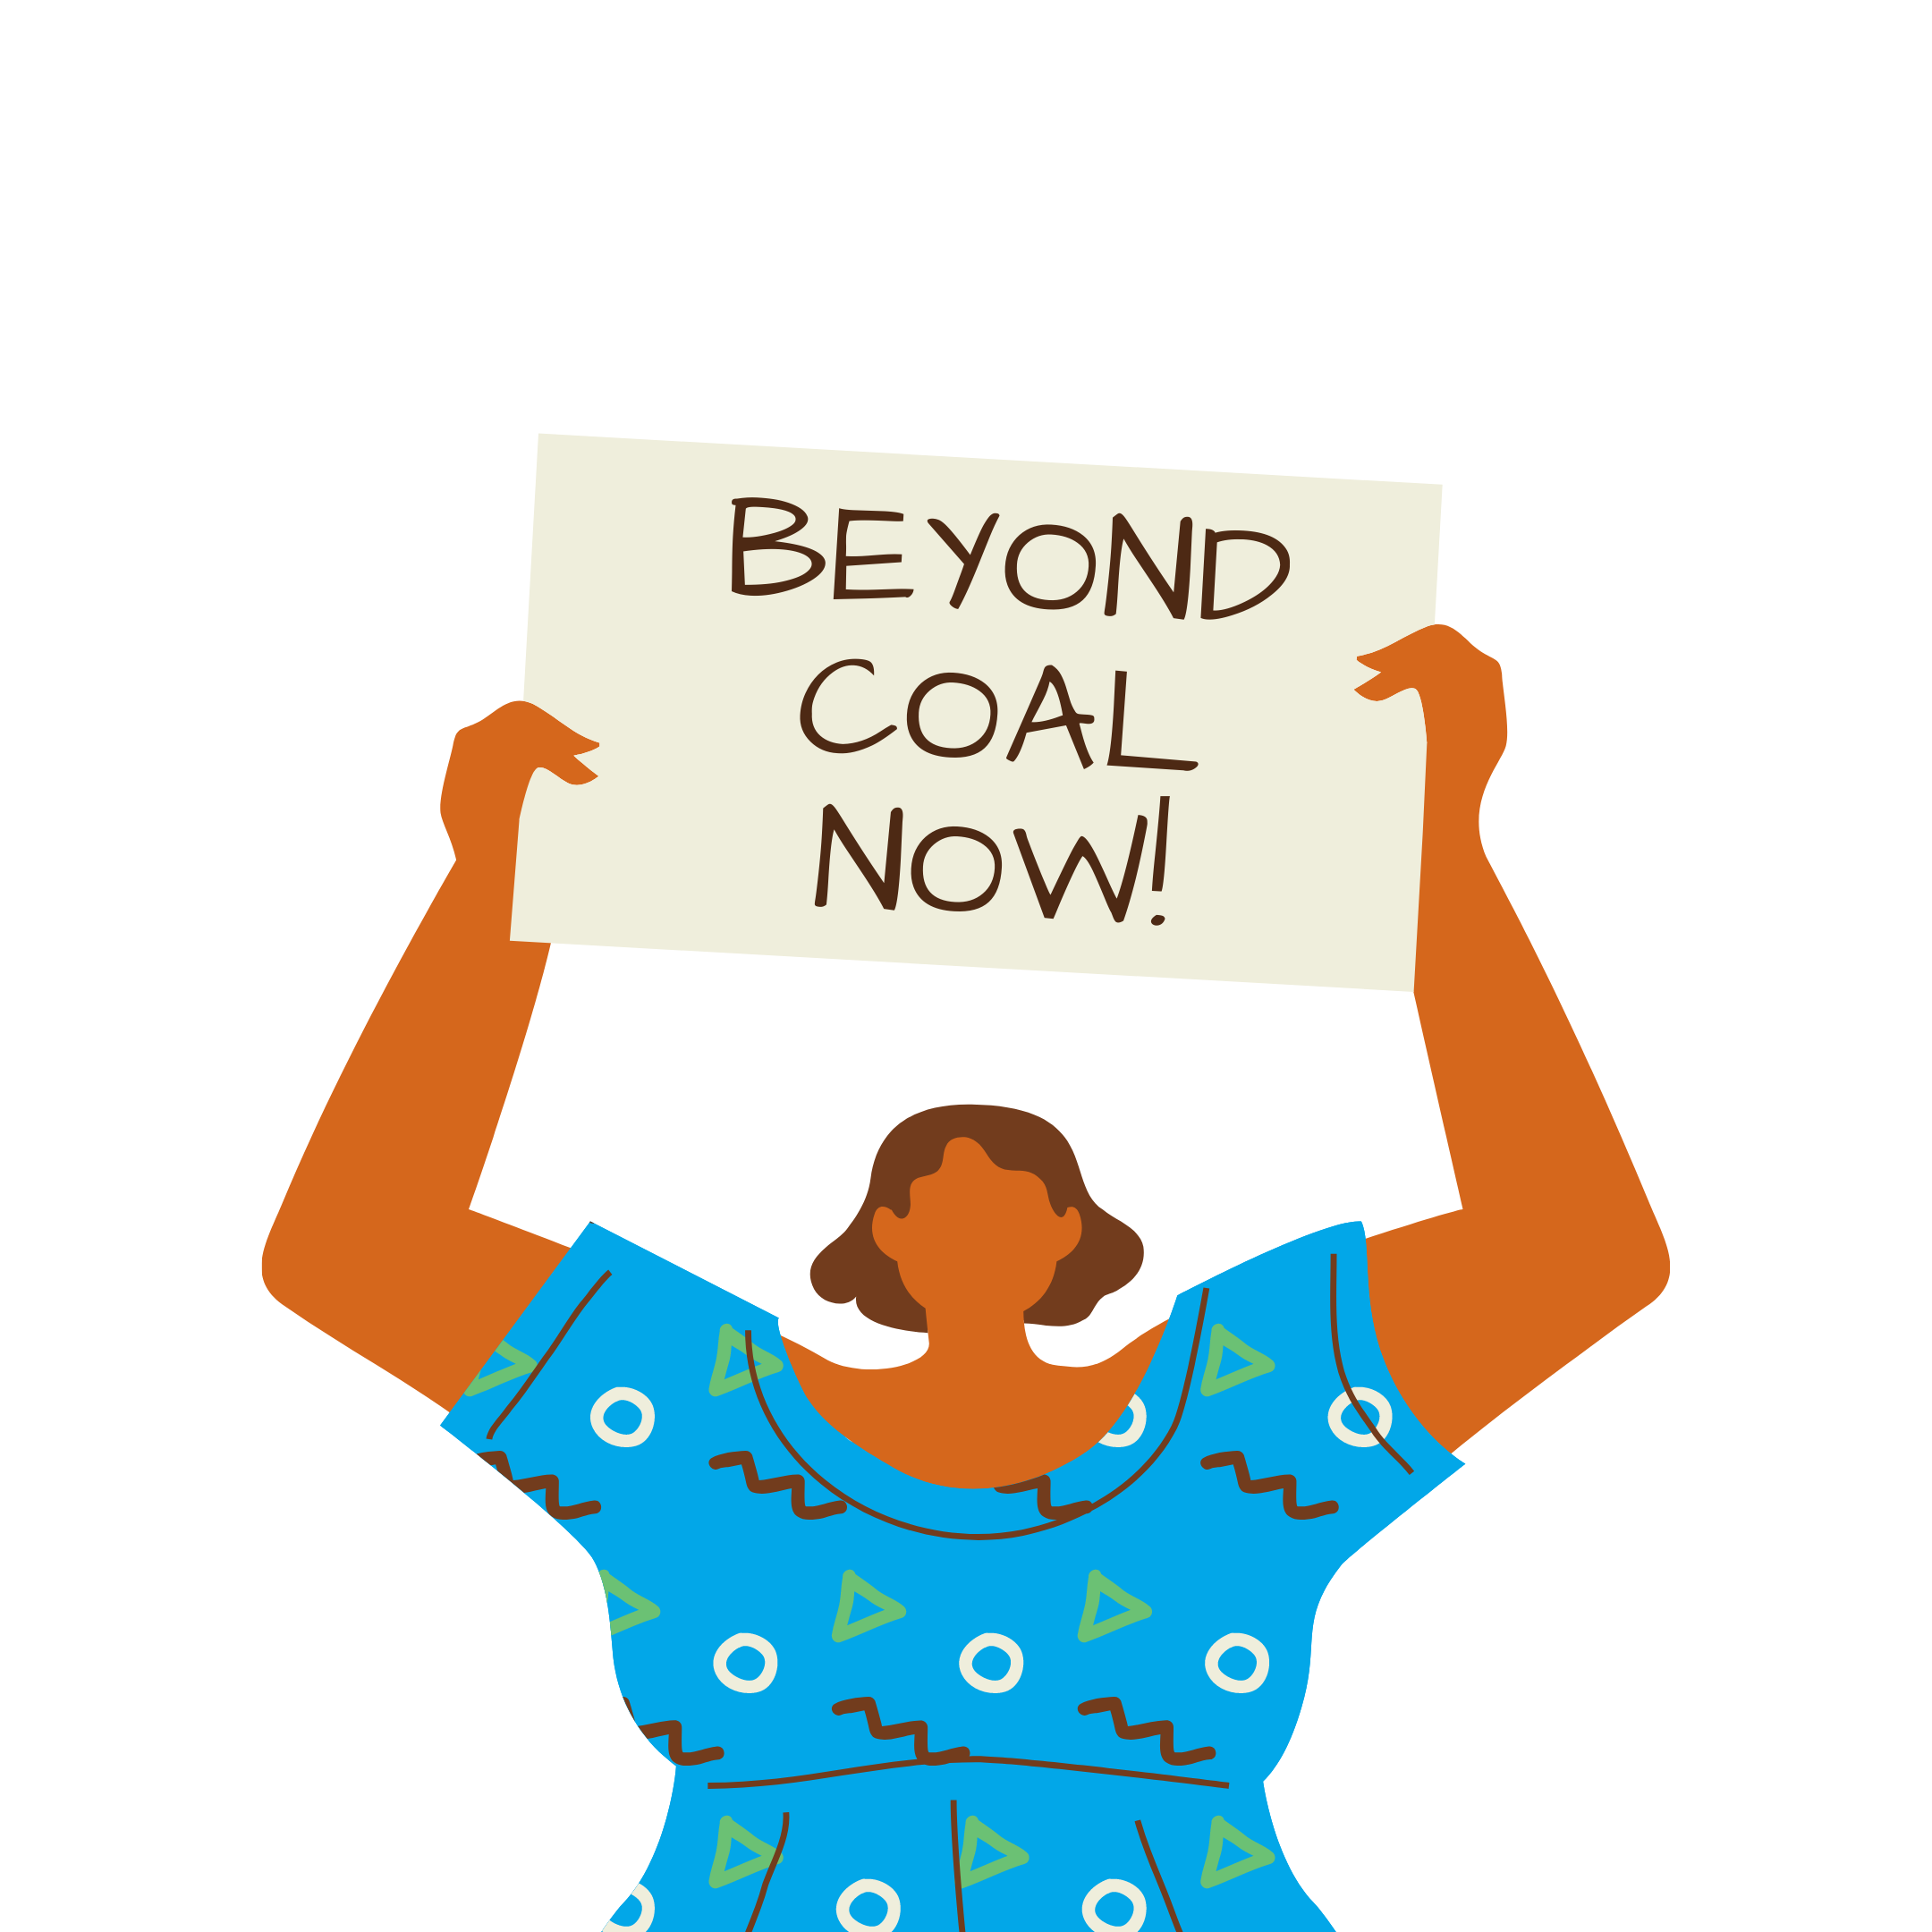 Beyond Coal Now!